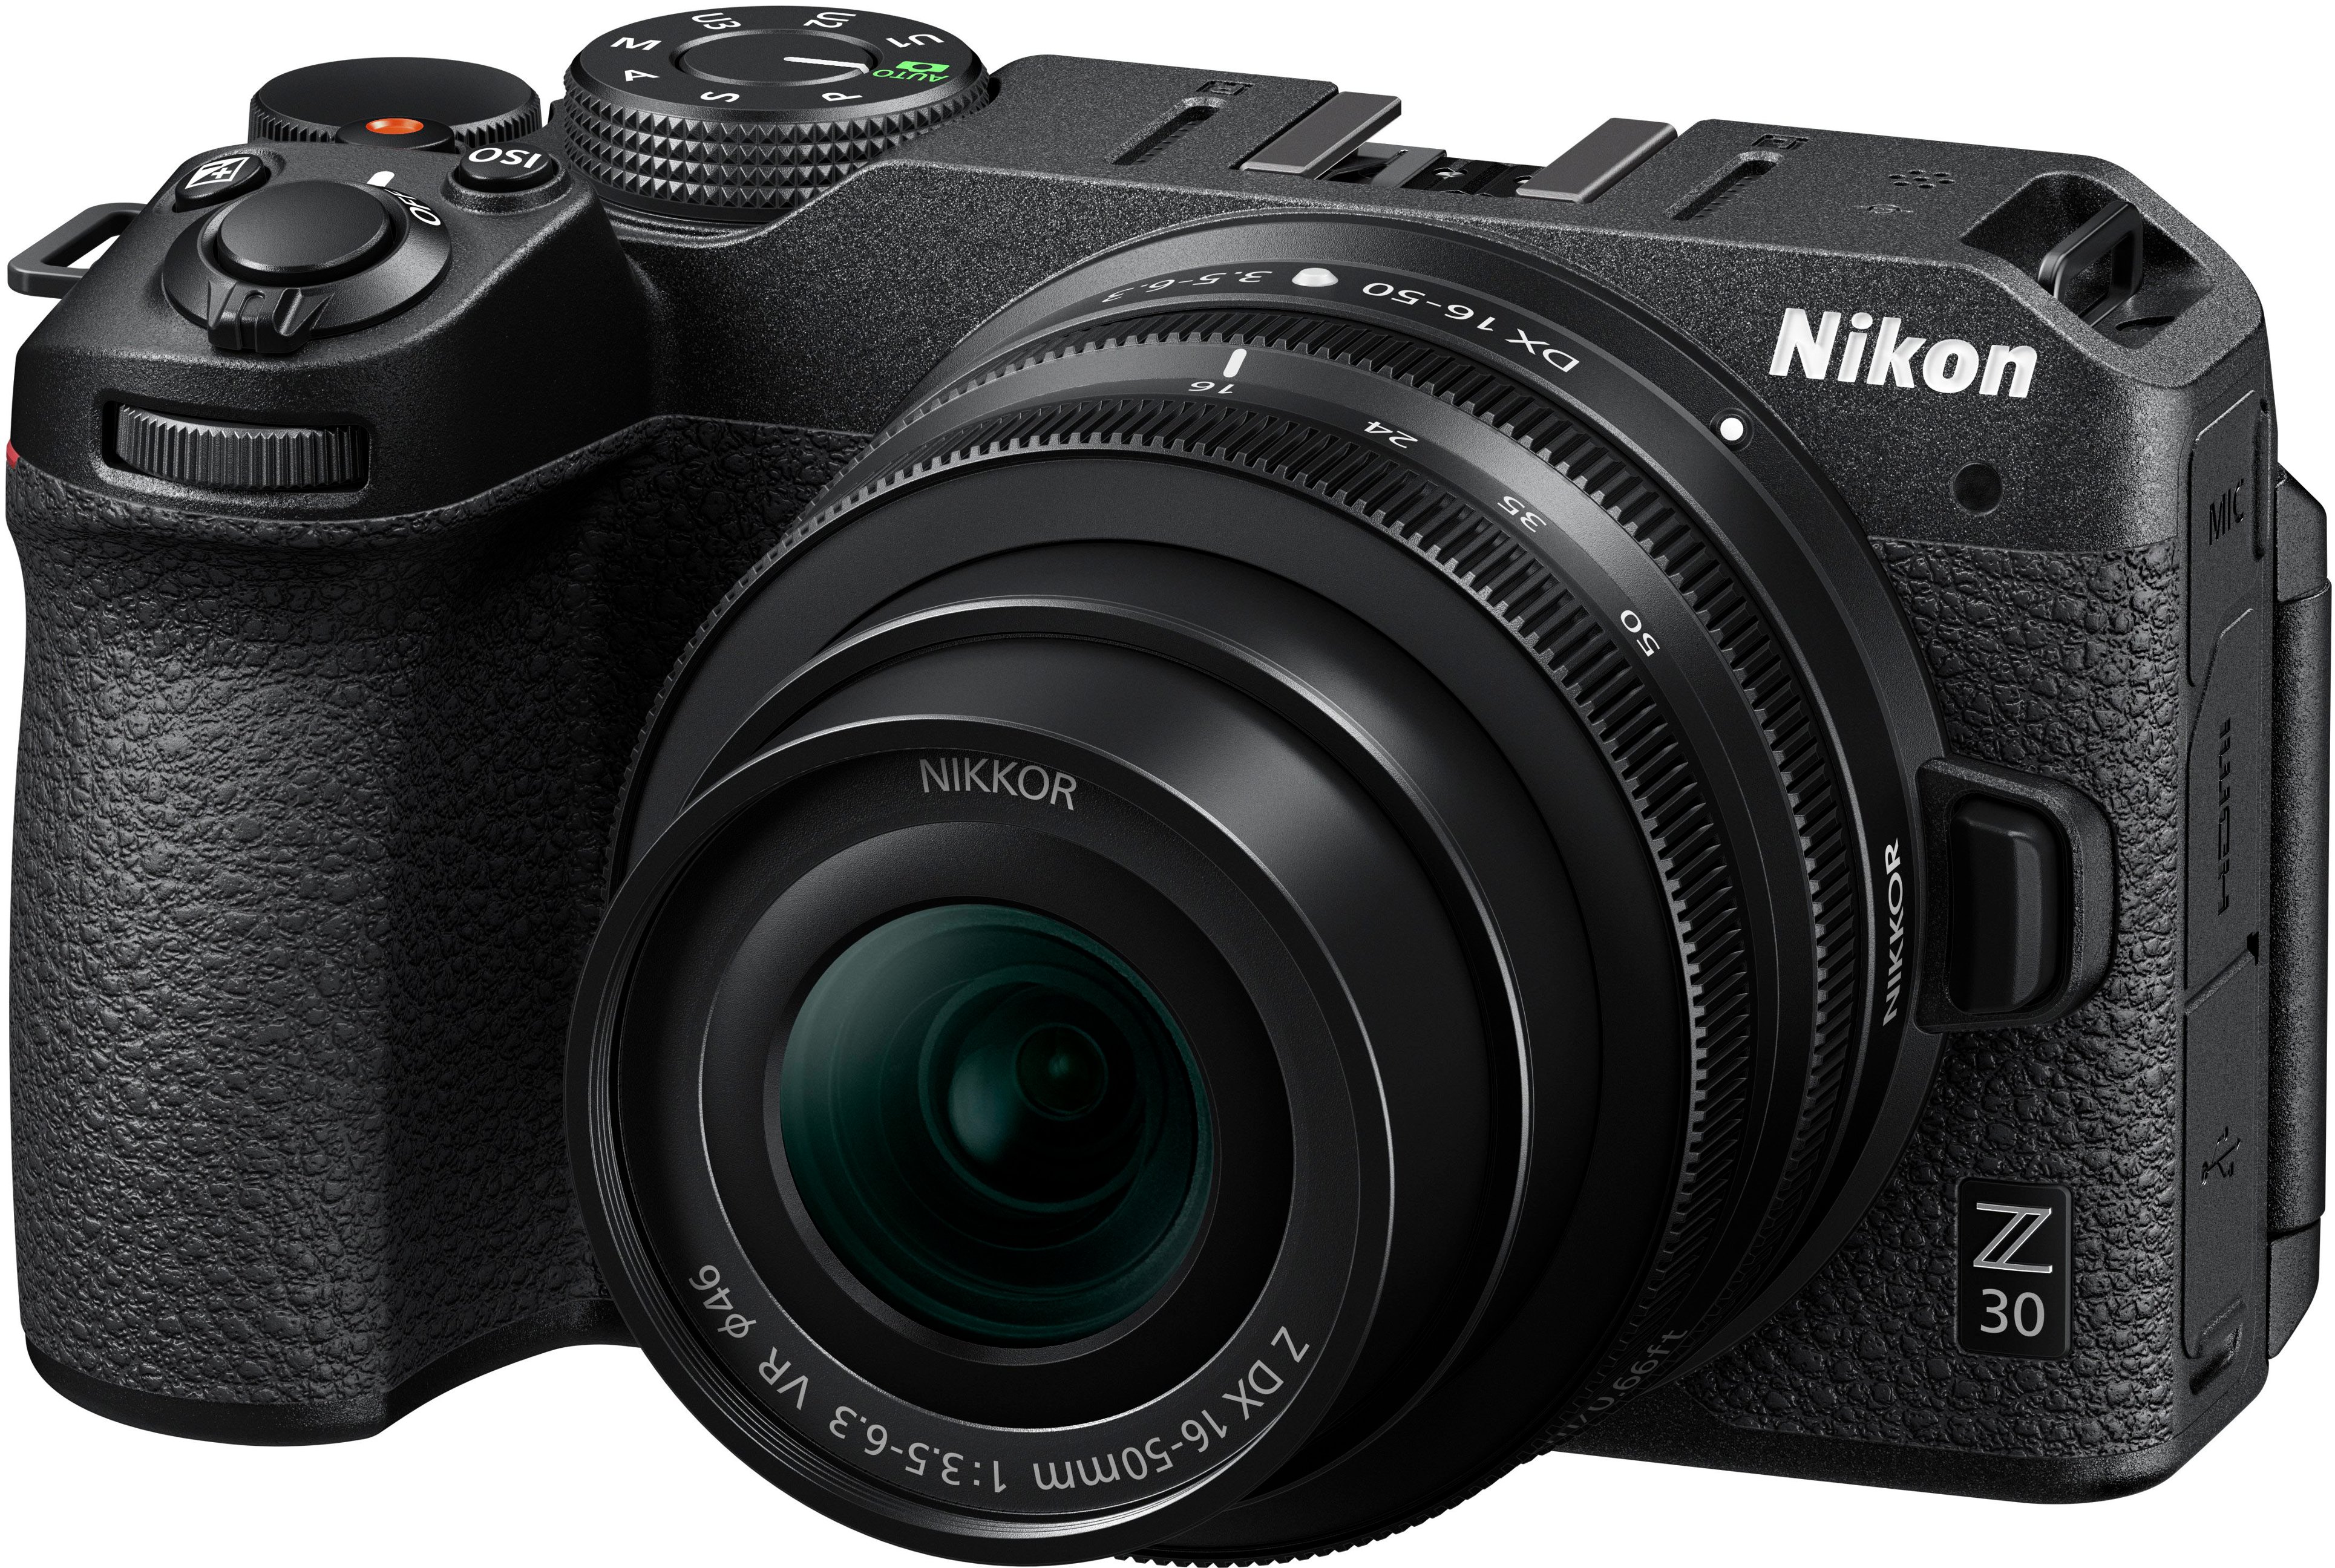 Angle View: Panasonic - LUMIX G100 Mirrorless Camera for Photo, 4K Video and Vlogging, 12-32mm Lens, Tripod Grip Bundle – DC-G100VK - Black